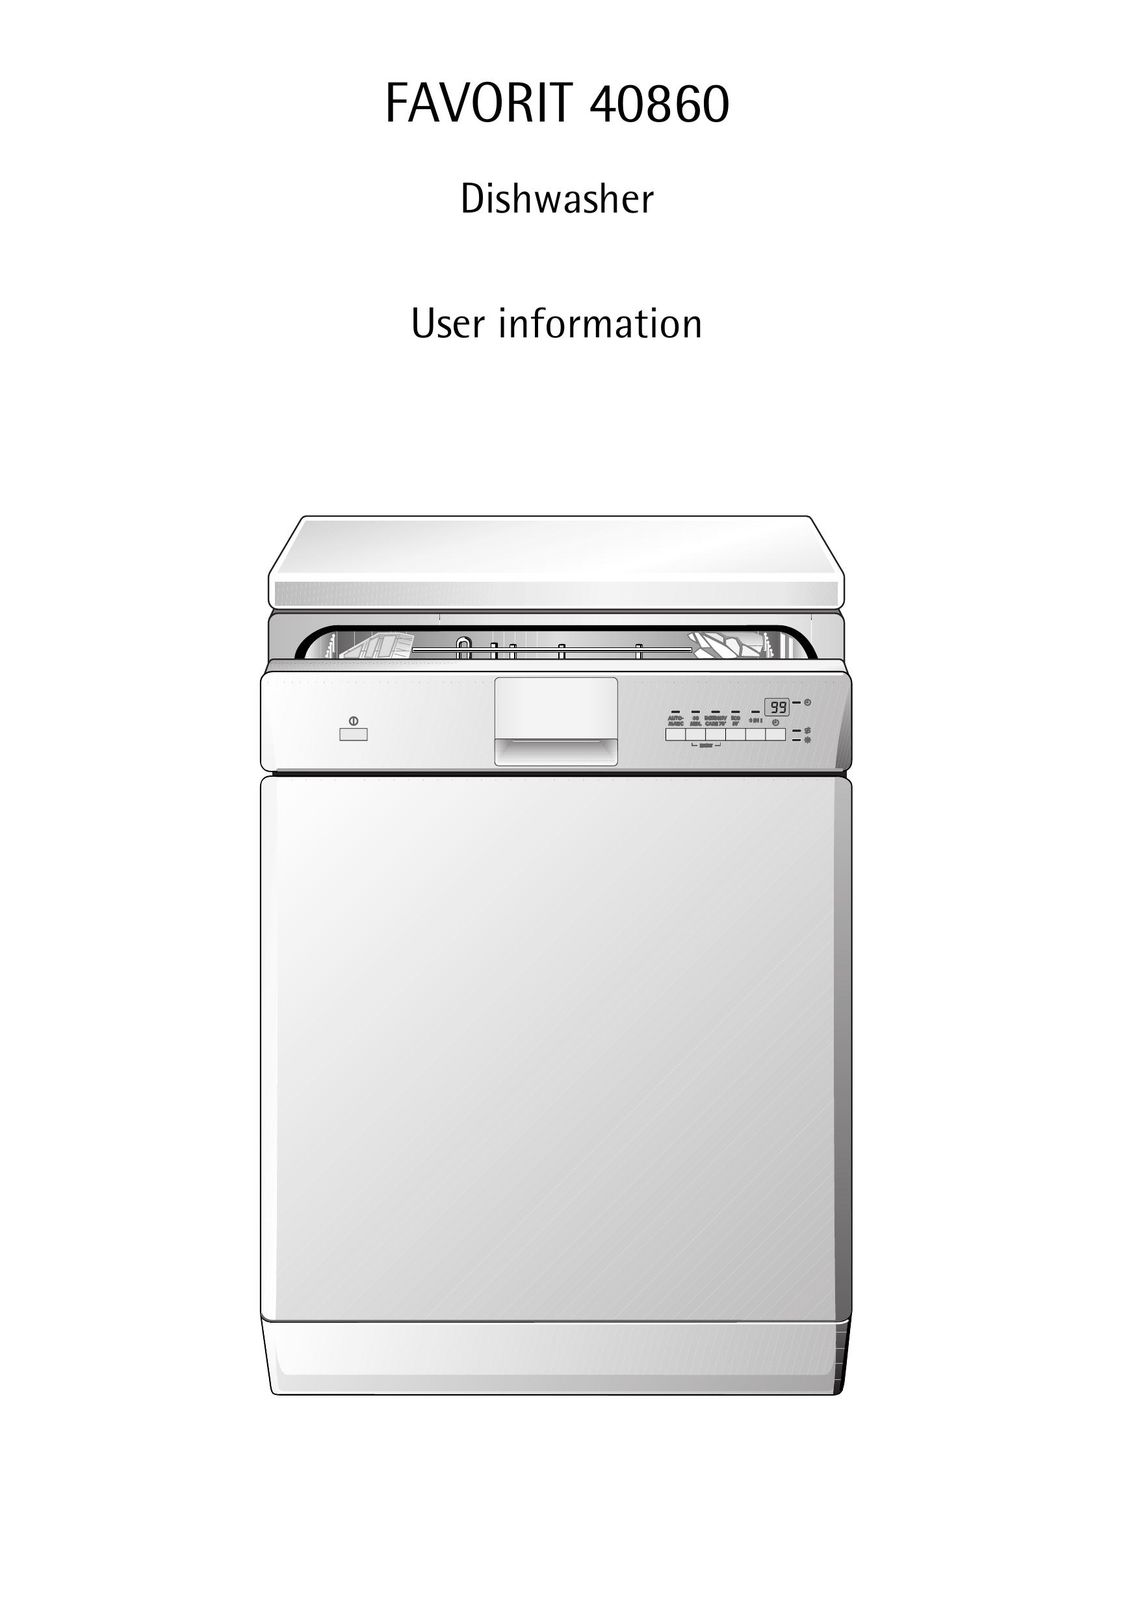 AEG 40860 Dishwasher User Manual